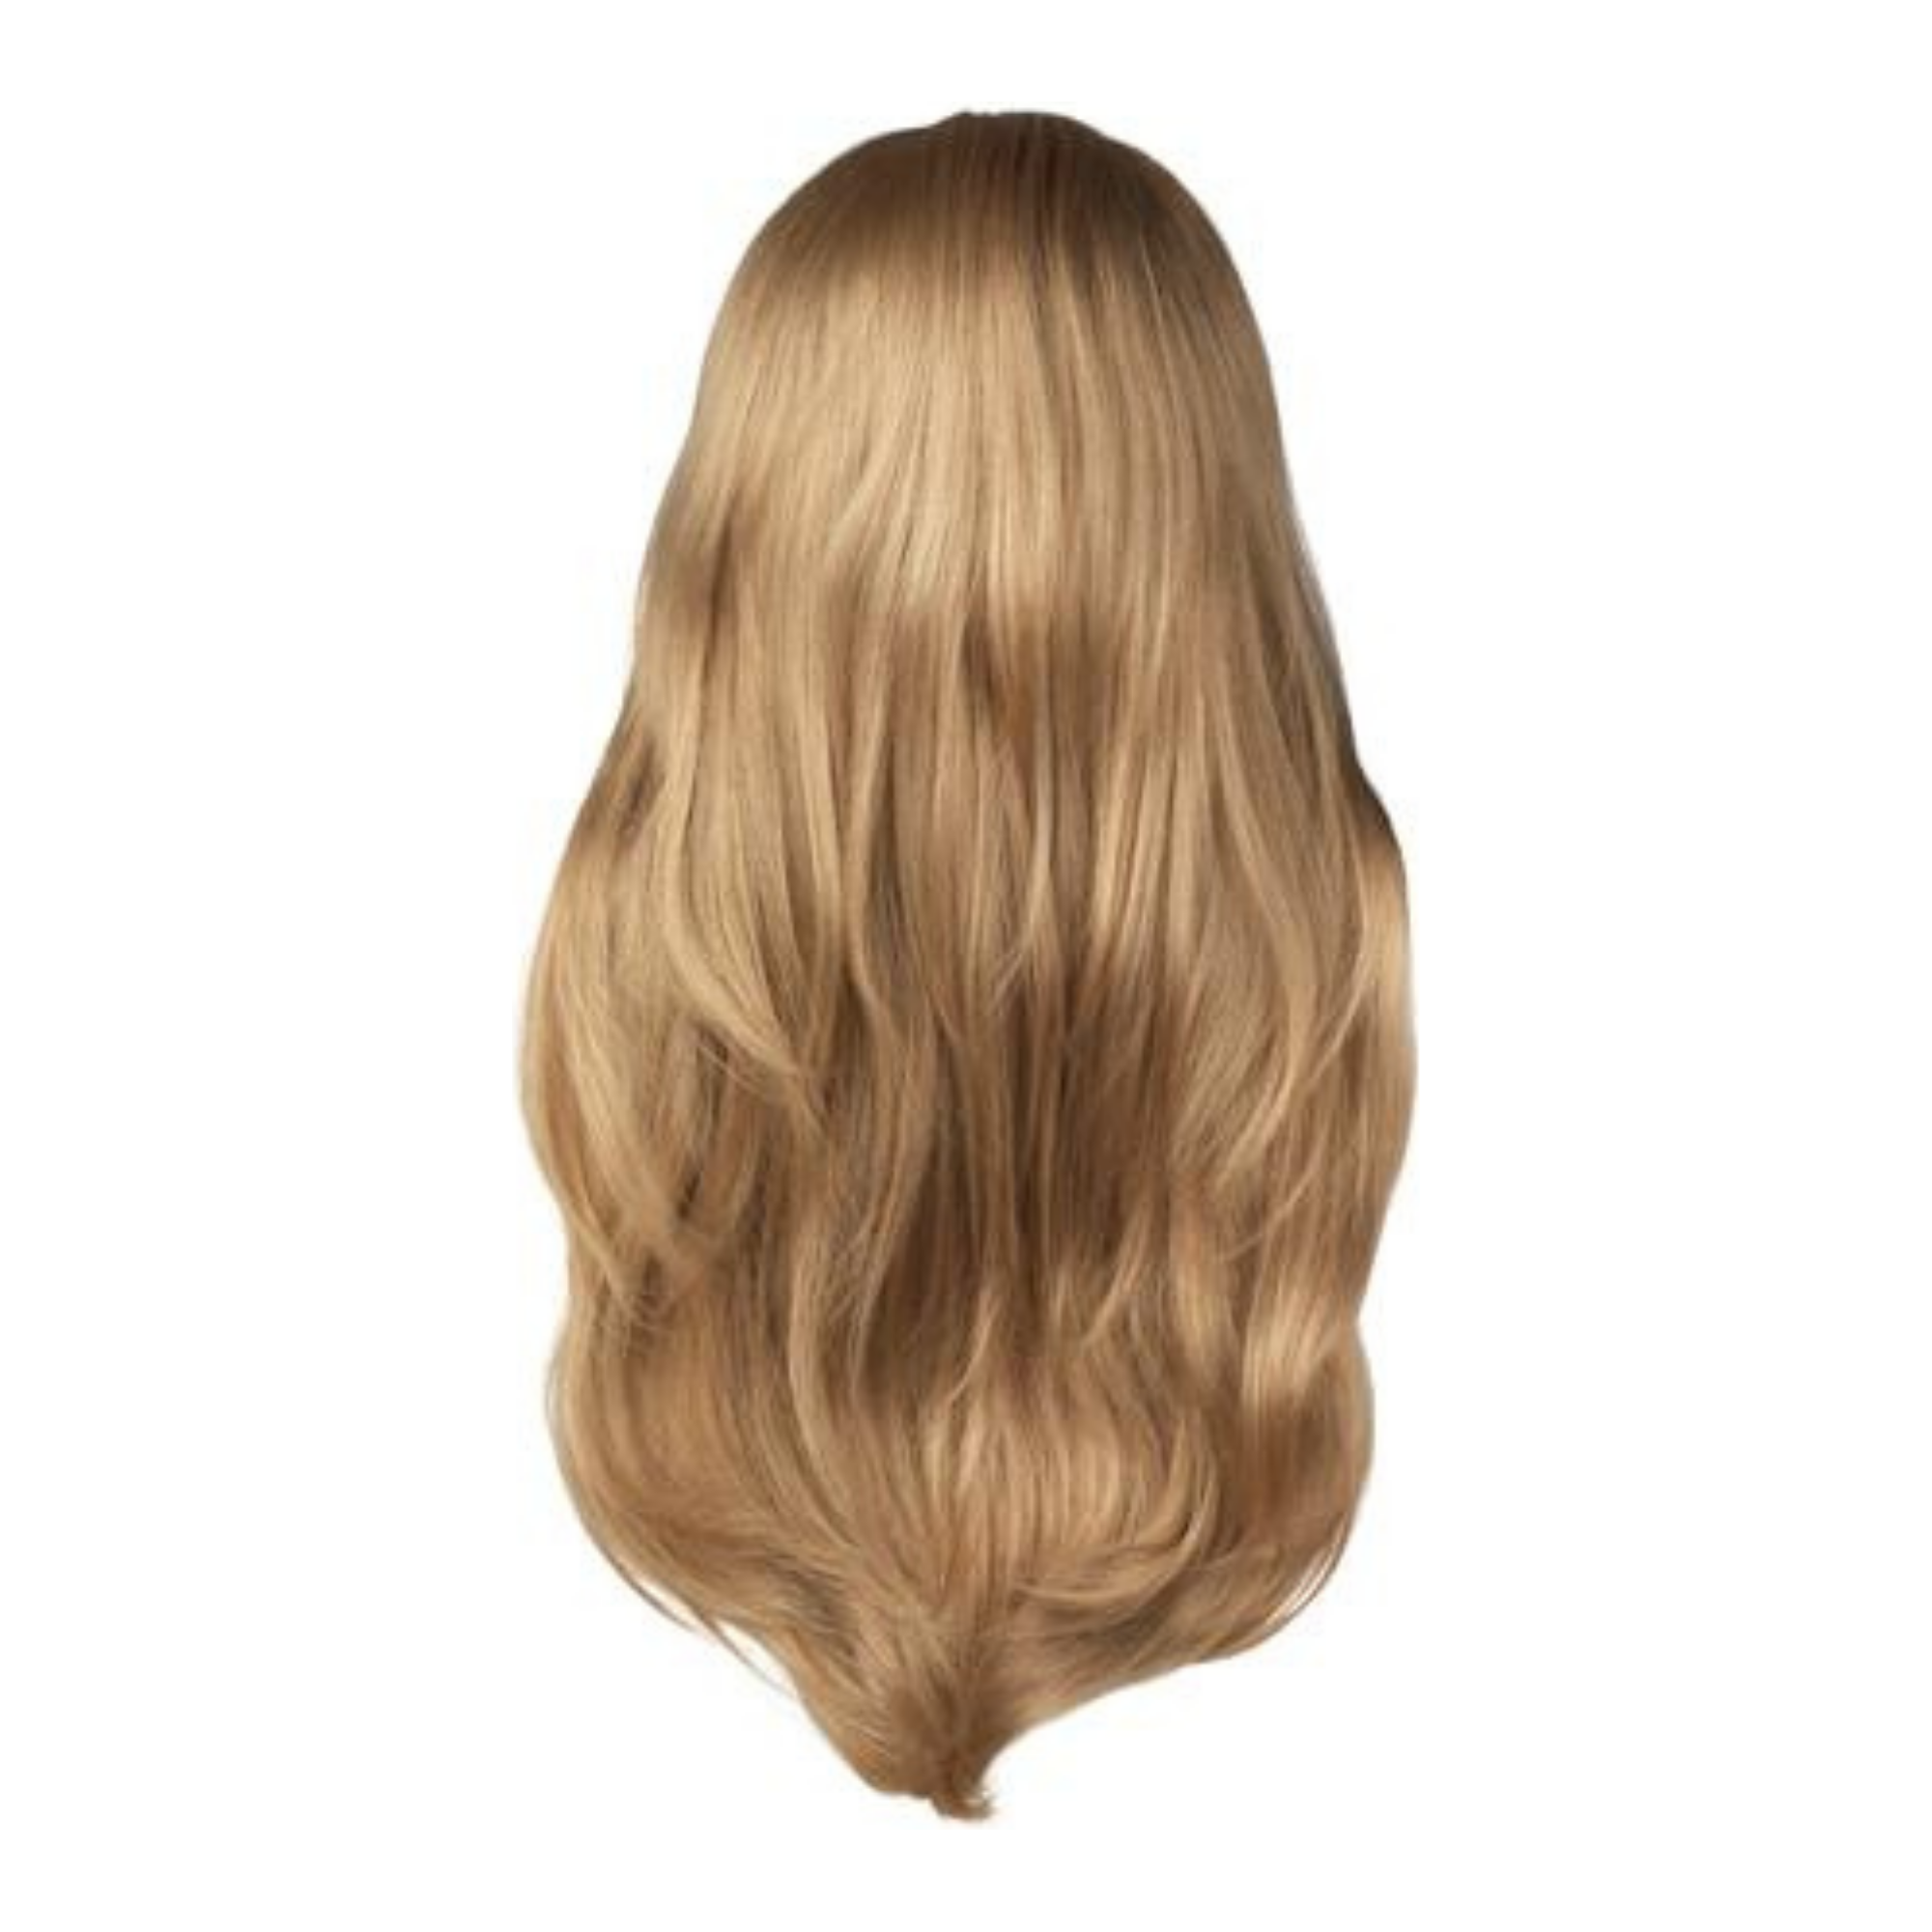 image of hair rehab london half wig hairpiece in shade vanilla beach